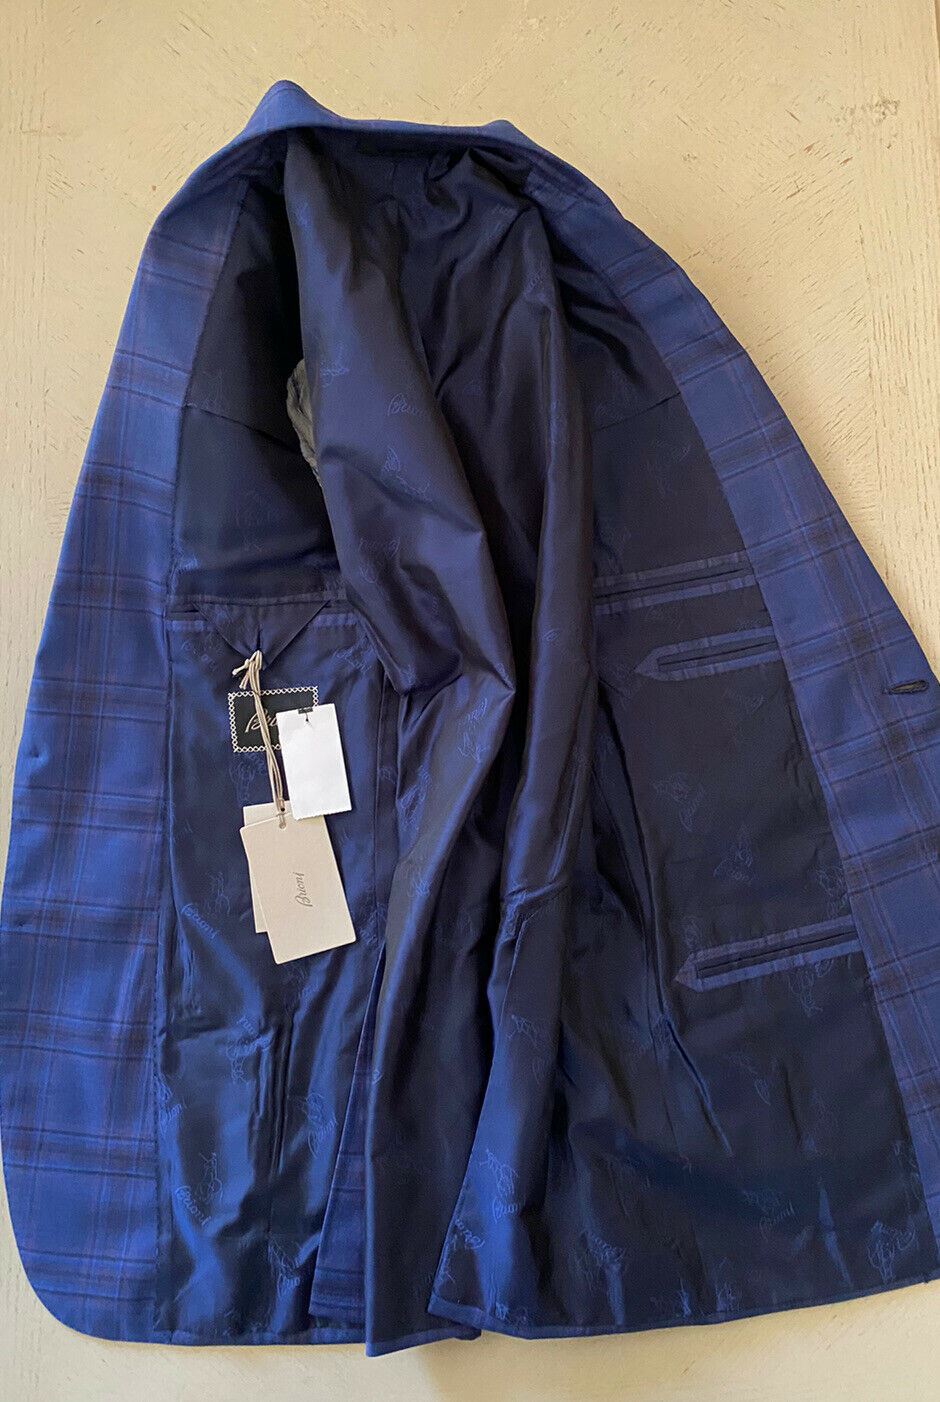 NWT $4900 Brioni Men’s Wool Sport Coat Blazer Jacket Blue 42S US/52S Eu Italy